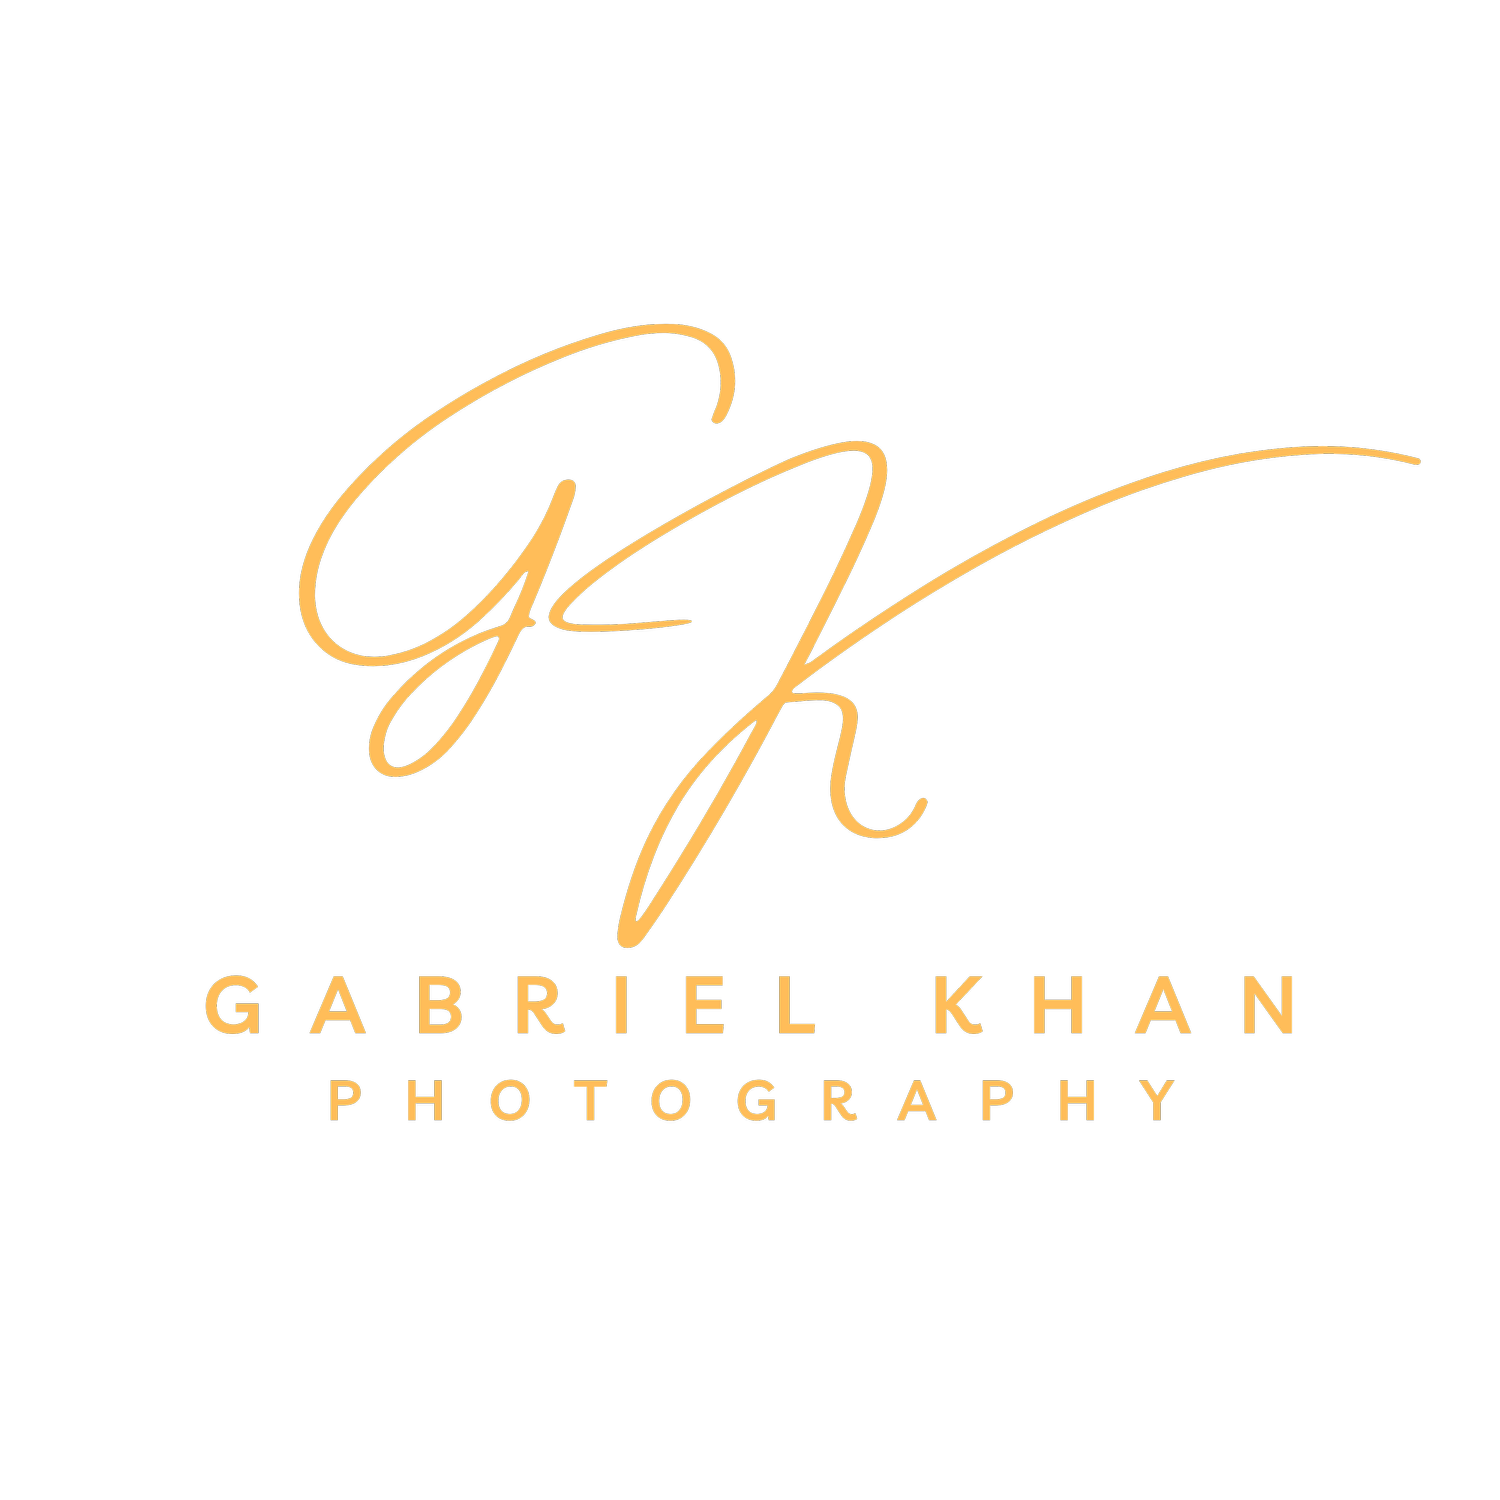 Gabriel Khan Photography